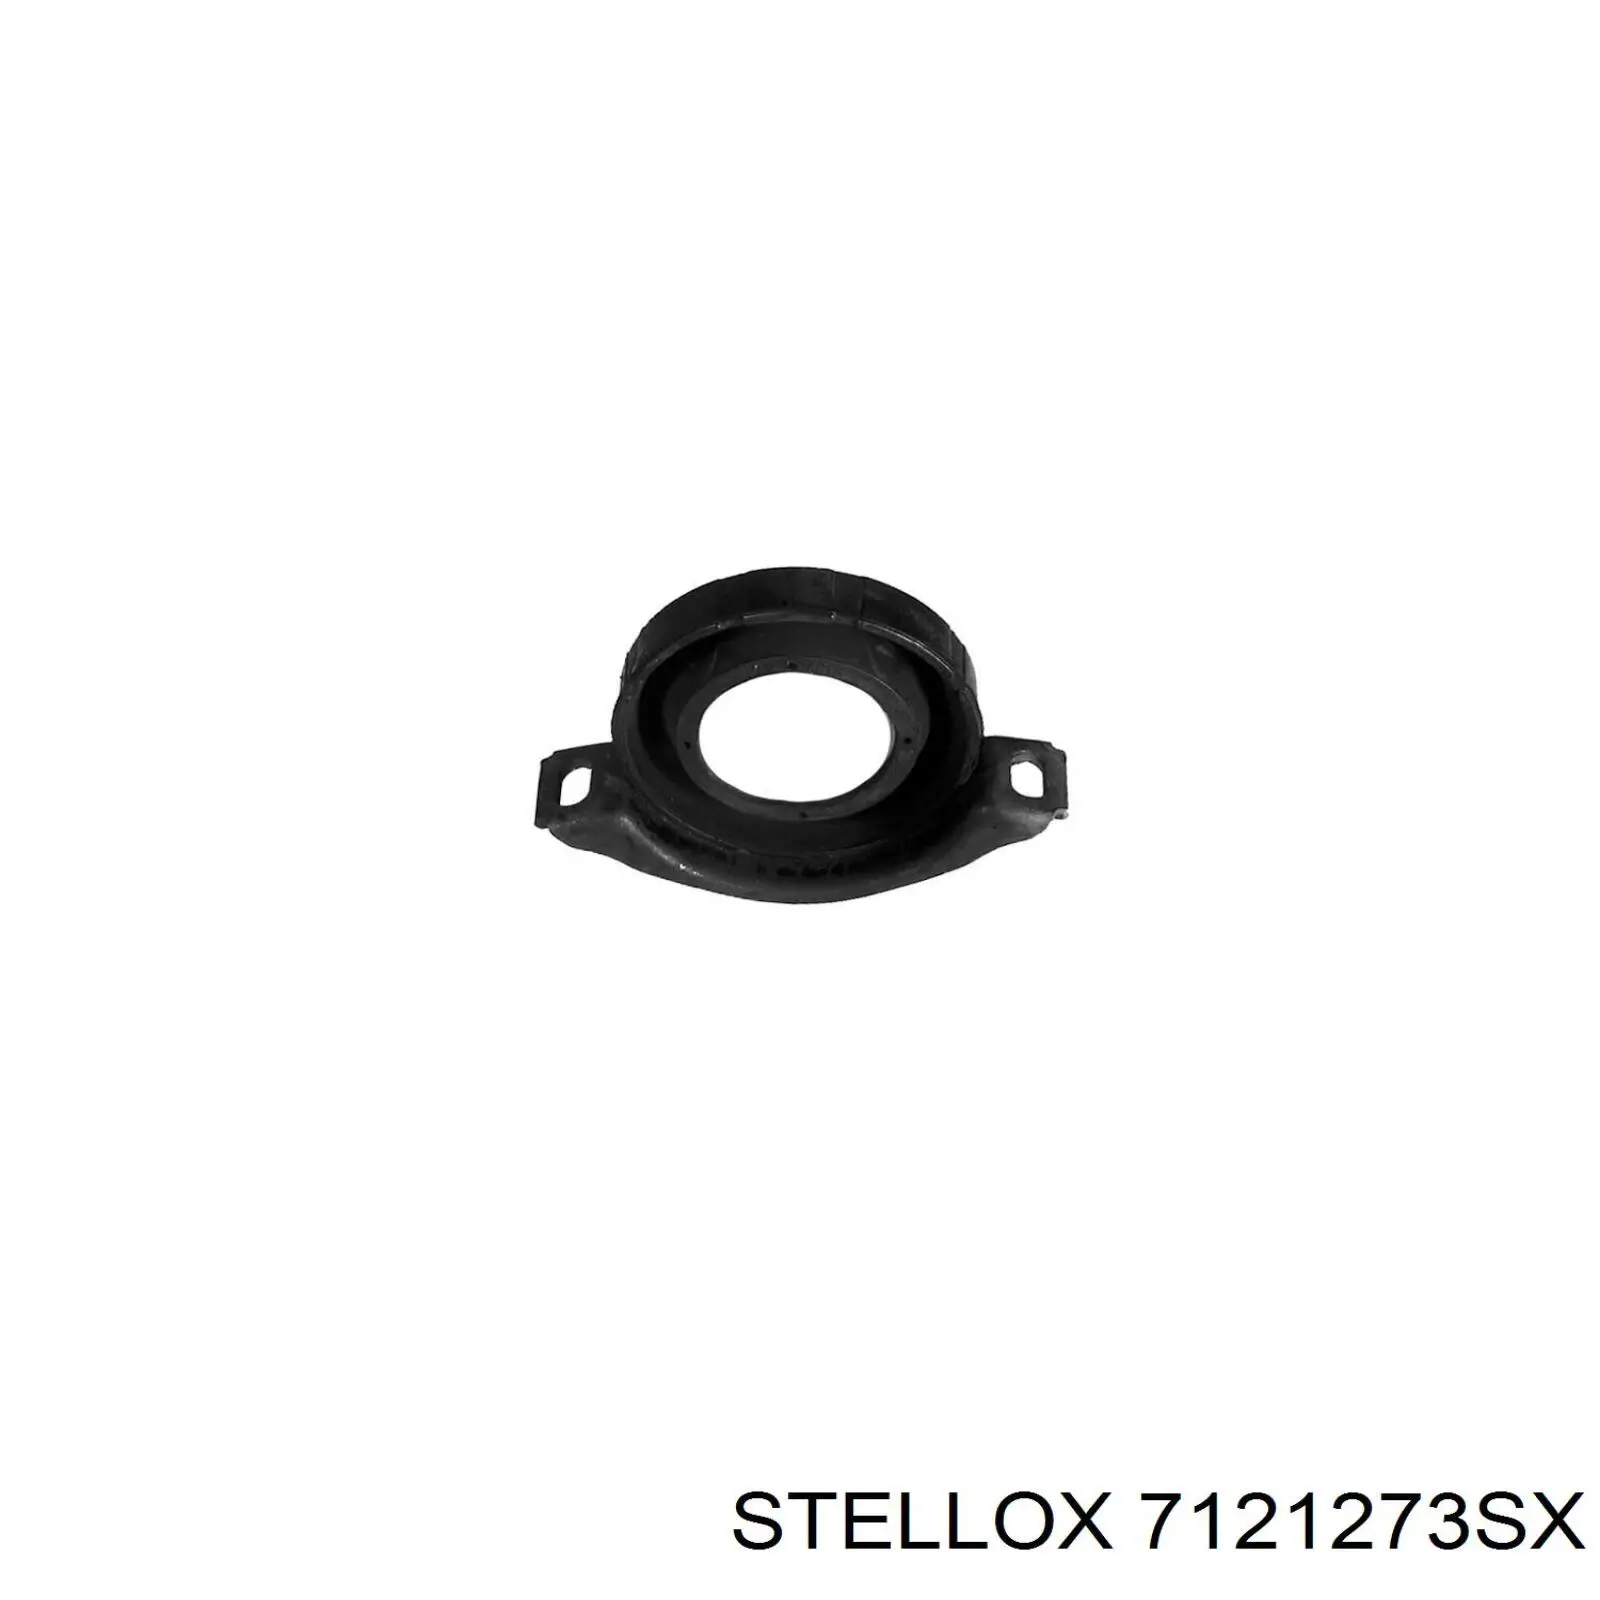 7121273SX Stellox 